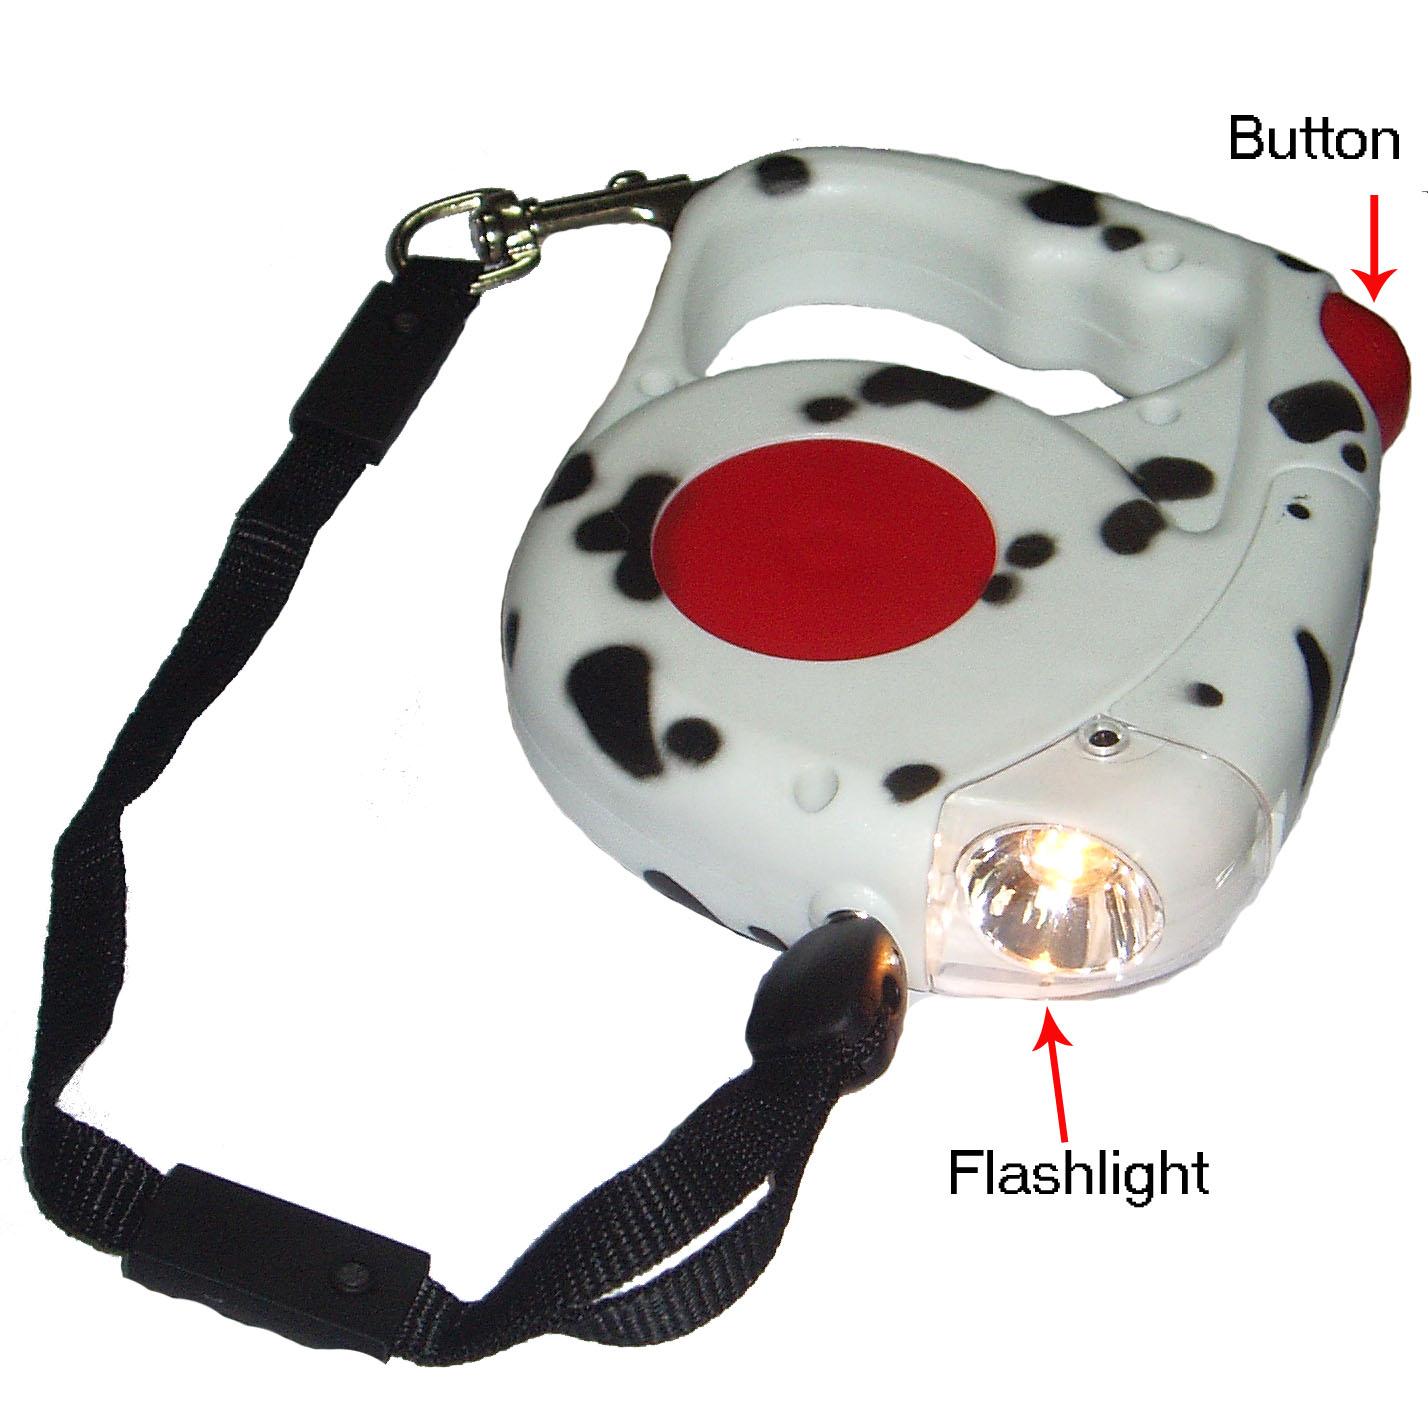 Retractable Dog Leash with Flashlight(DL 0272)